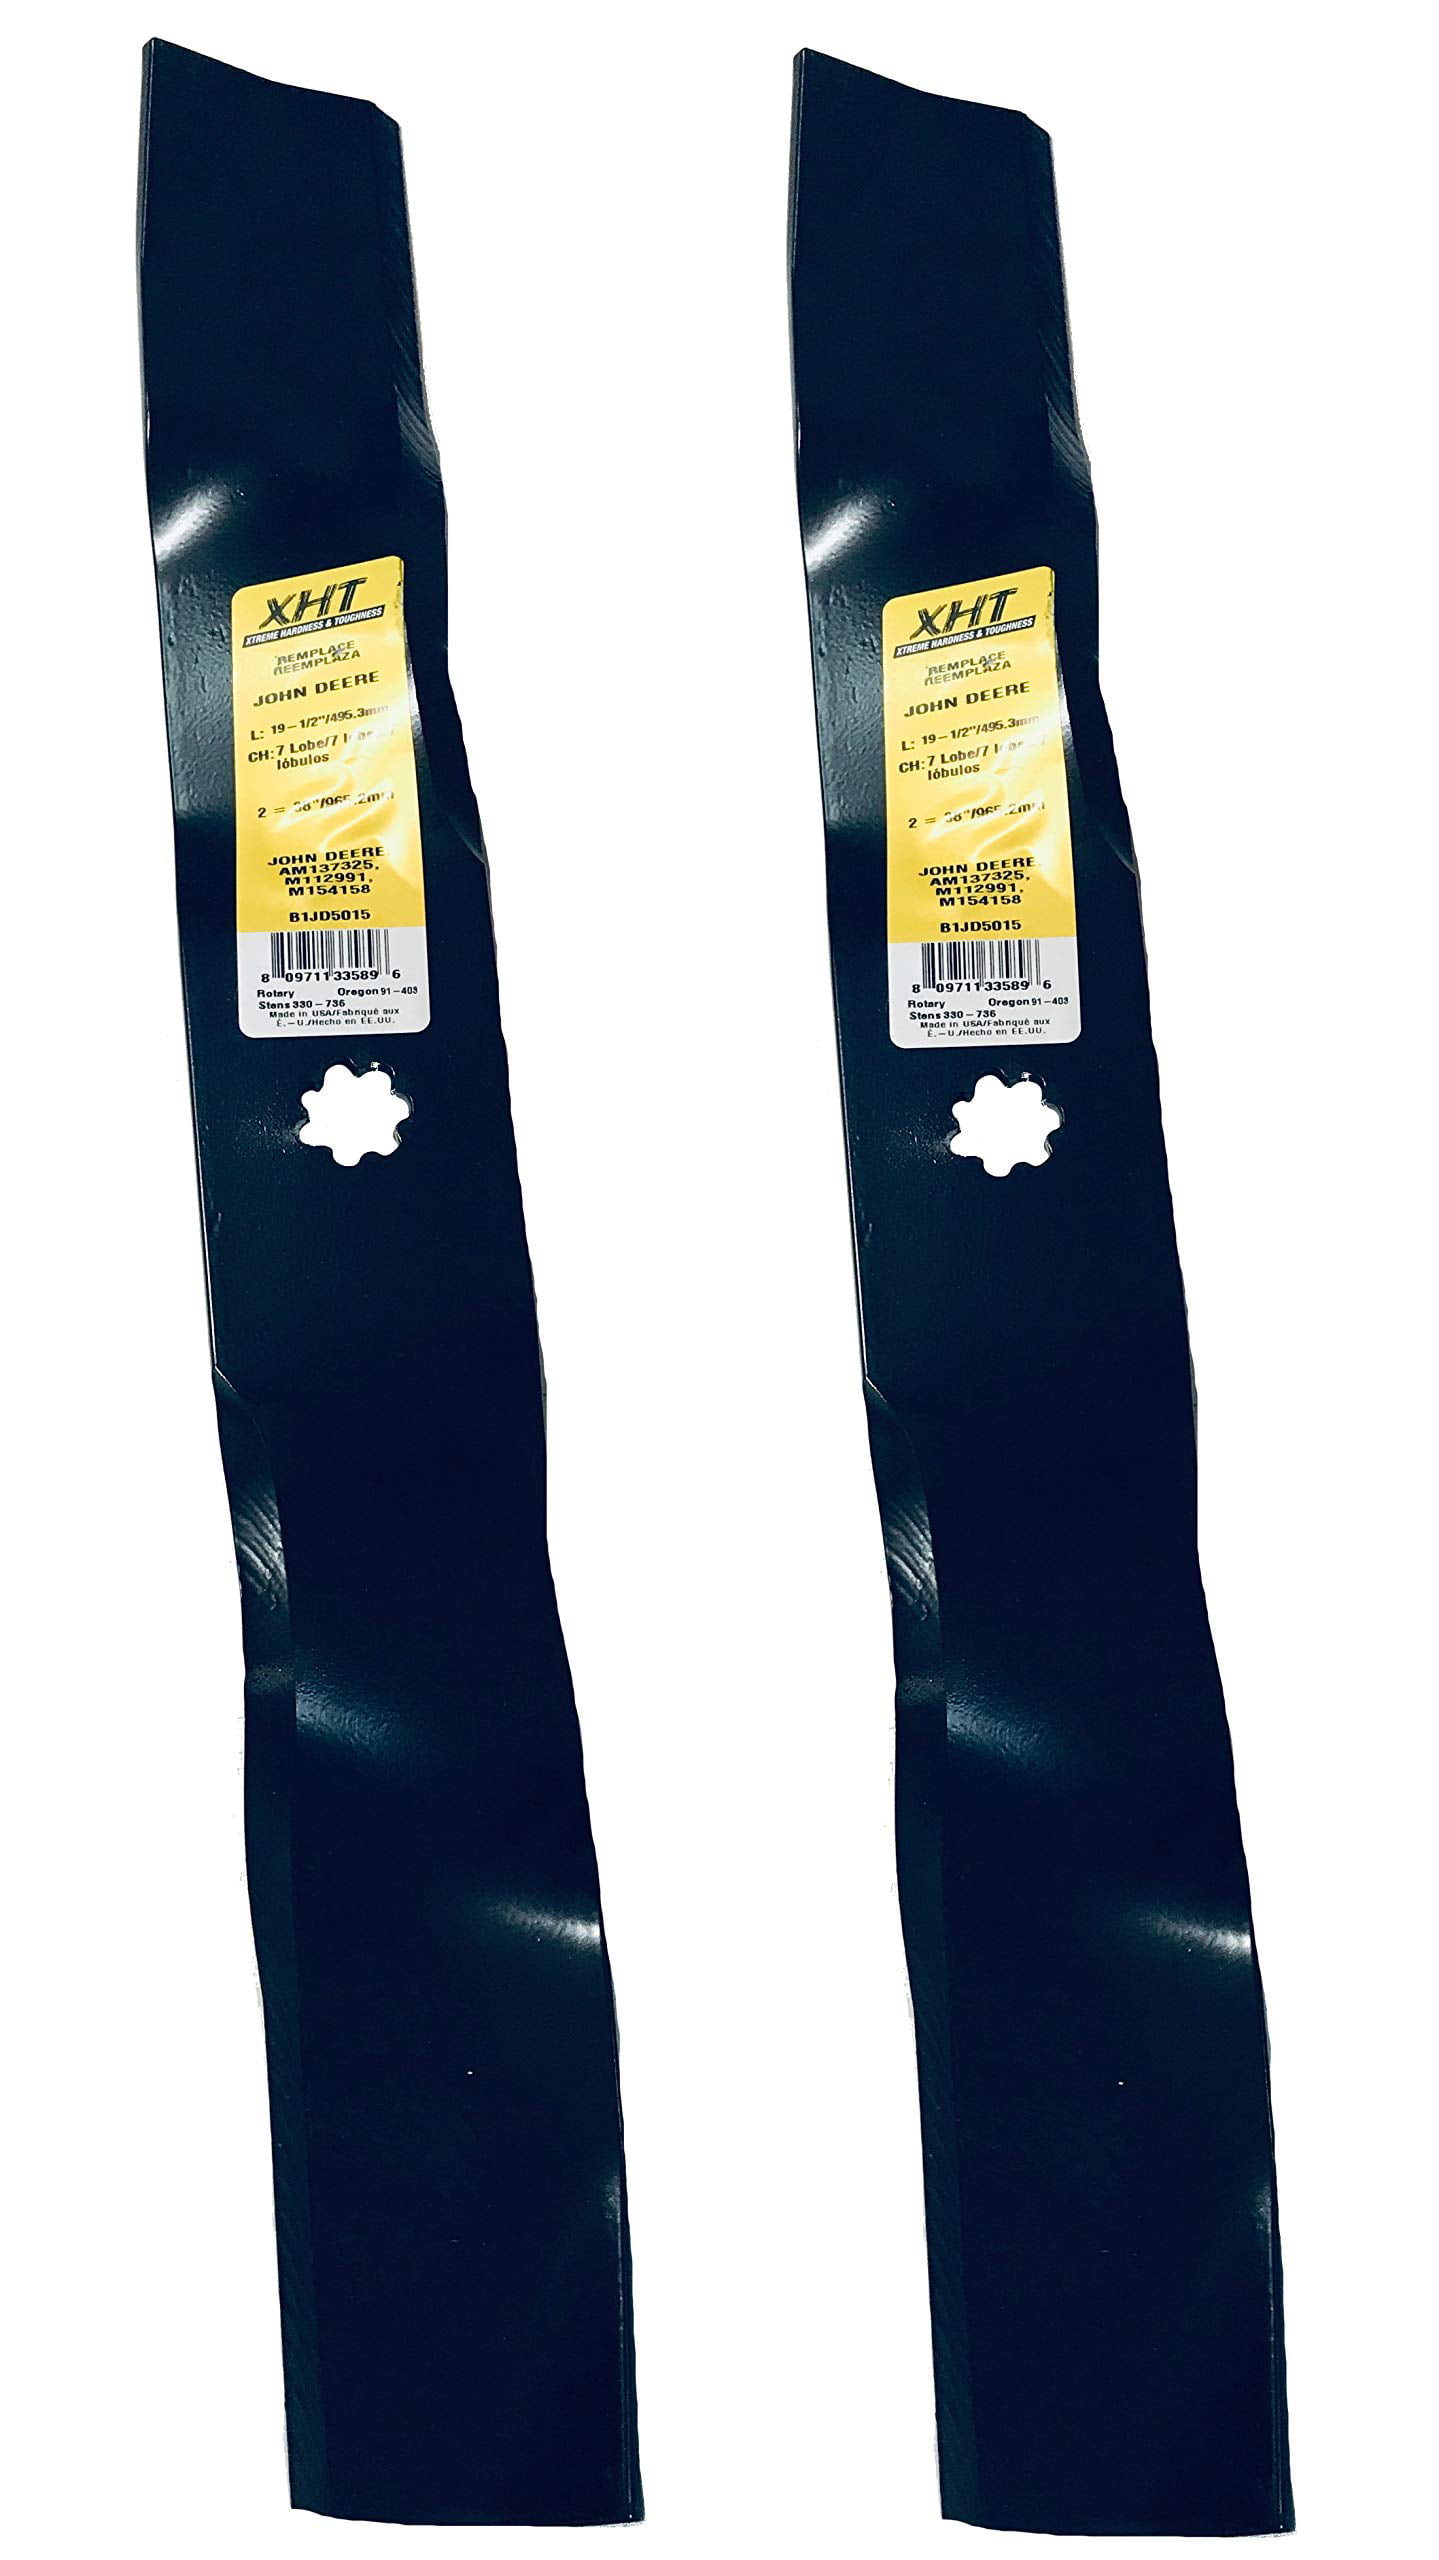 Aftermarket Premium Replacement XHT High Lift Lawn Mower Deck Blade fits John Deere AM141033 2 Pack 7 Lobe 21-3/8 x 2-3/4